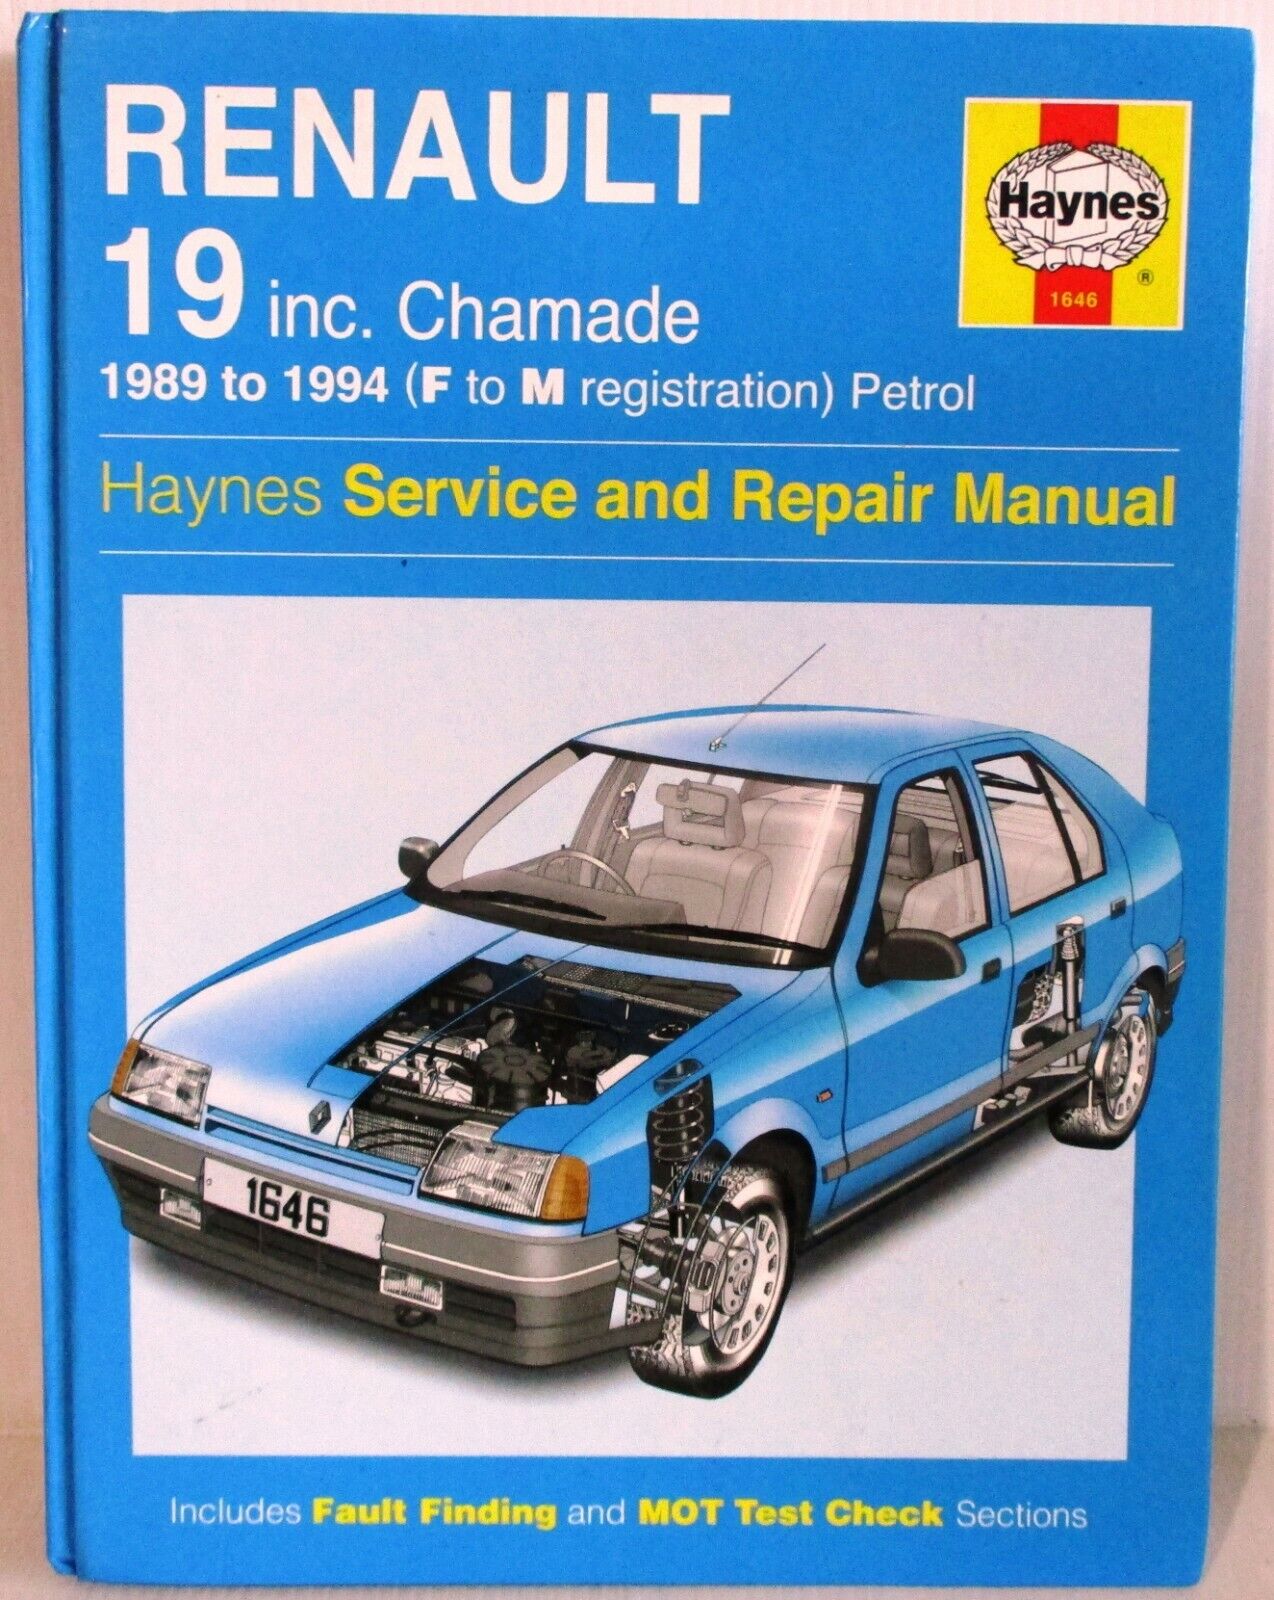 Haynes - Renault 19 inc. Chamade / 1989 to 1994 / Service and Repair Manual, 142